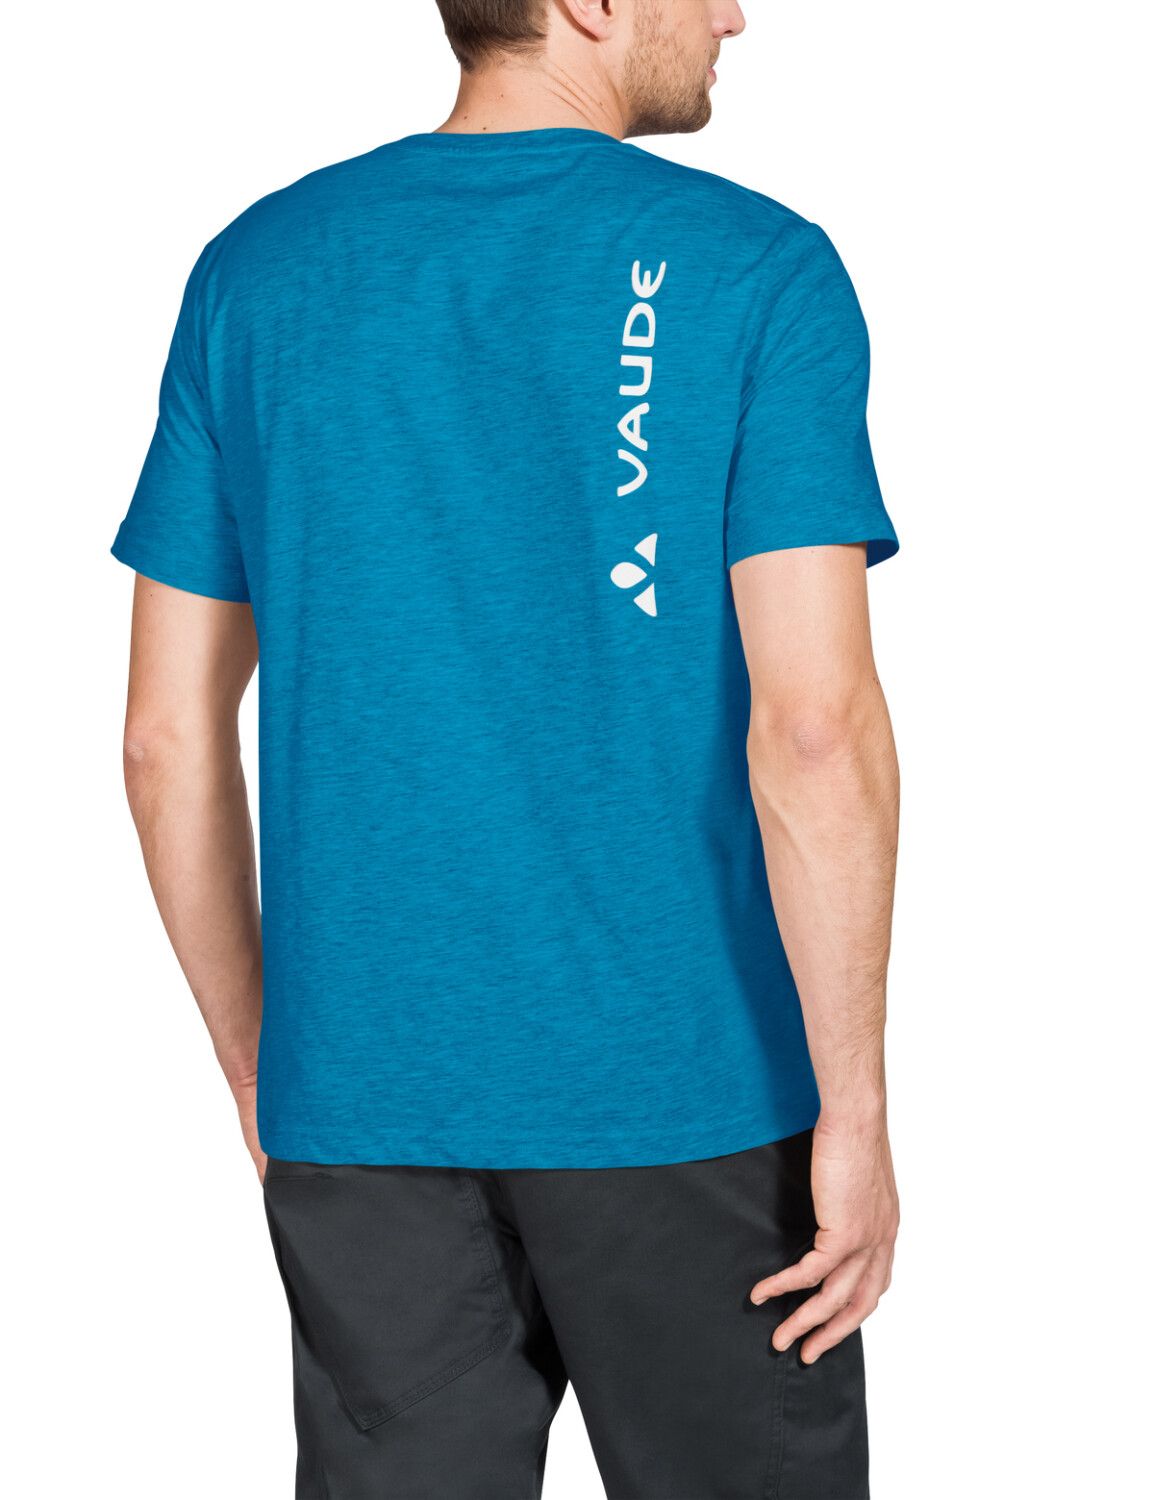 VAUDE Men's Brand T-Shirt (Bild 1)